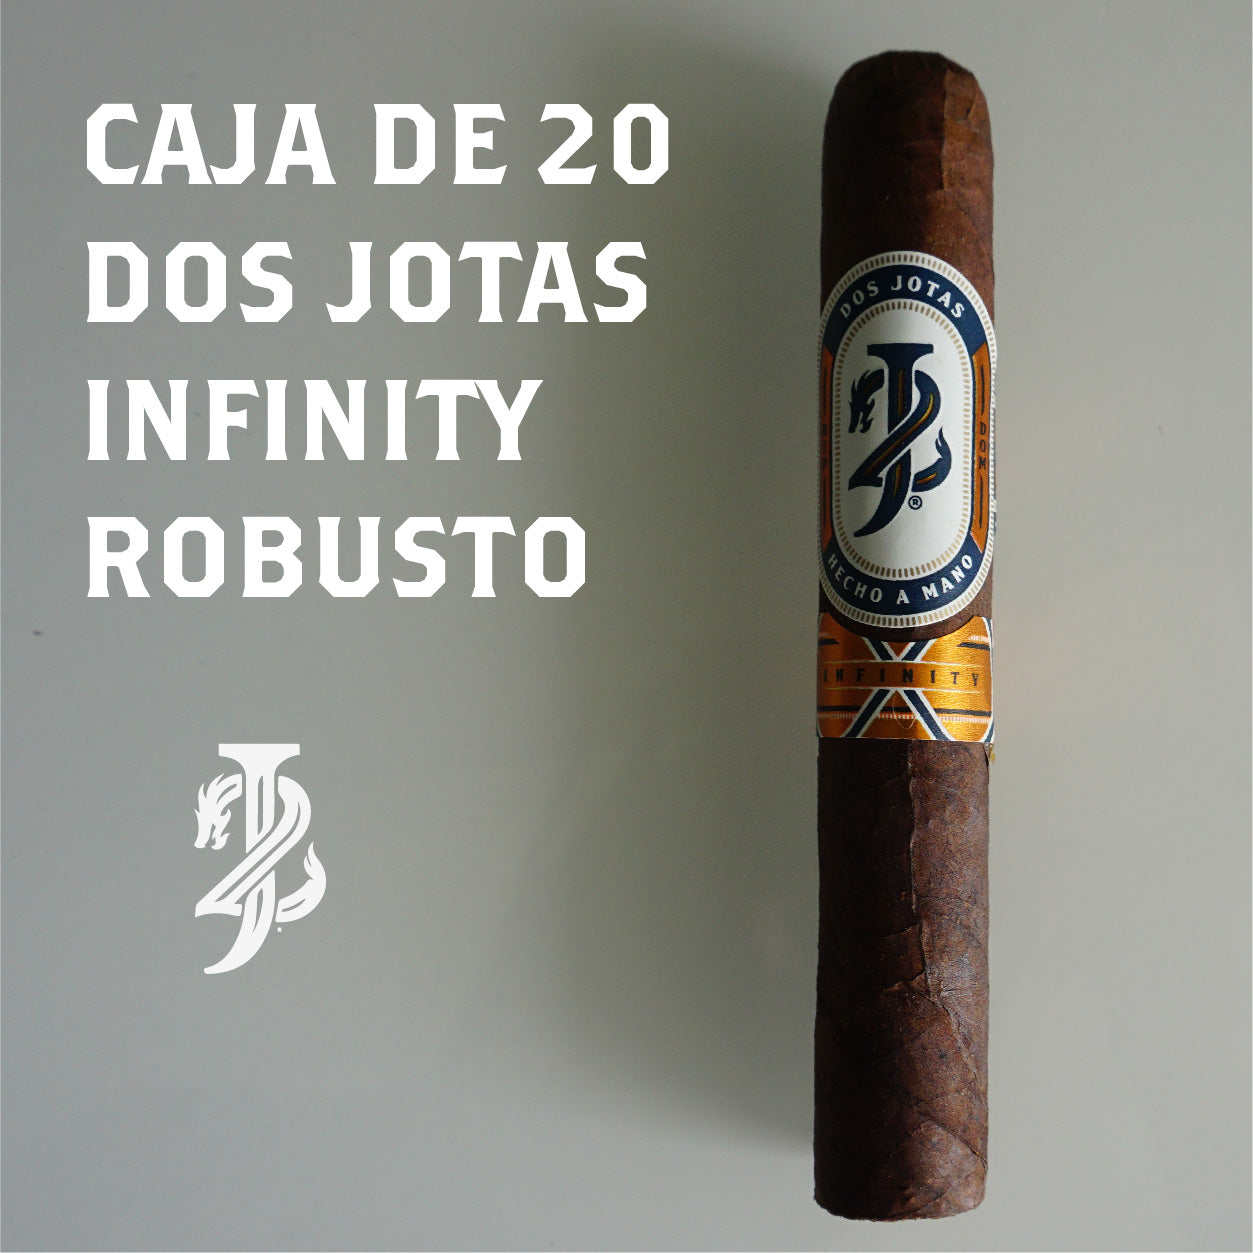 Infinity Dos Jotas - Robusto